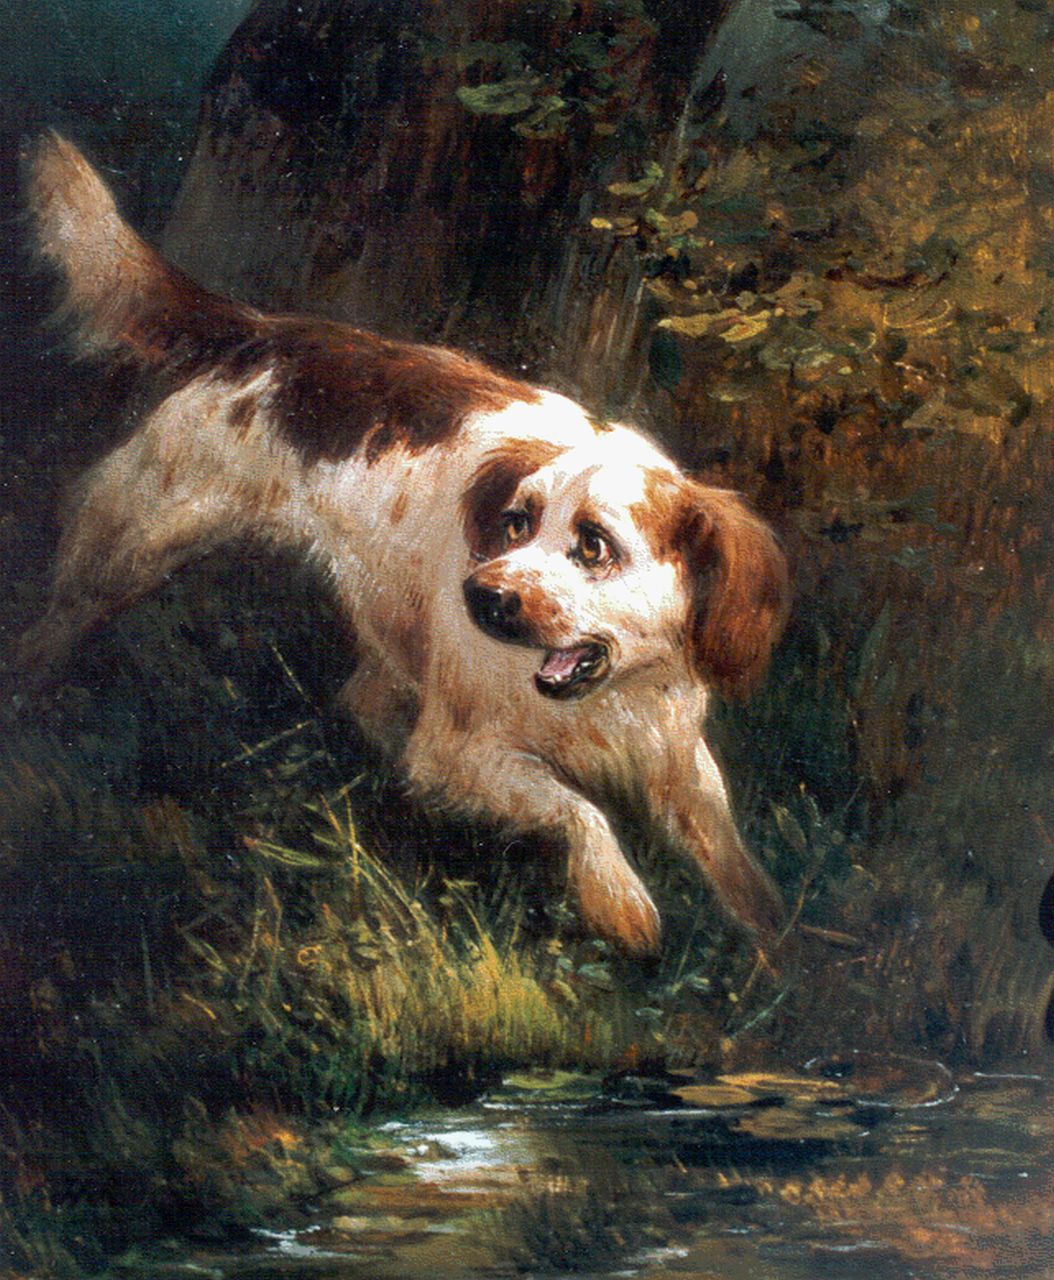 Ronner-Knip H.  | Henriette Ronner-Knip, Spaniel, oil on panel 19.1 x 15.7 cm, signed l.l.